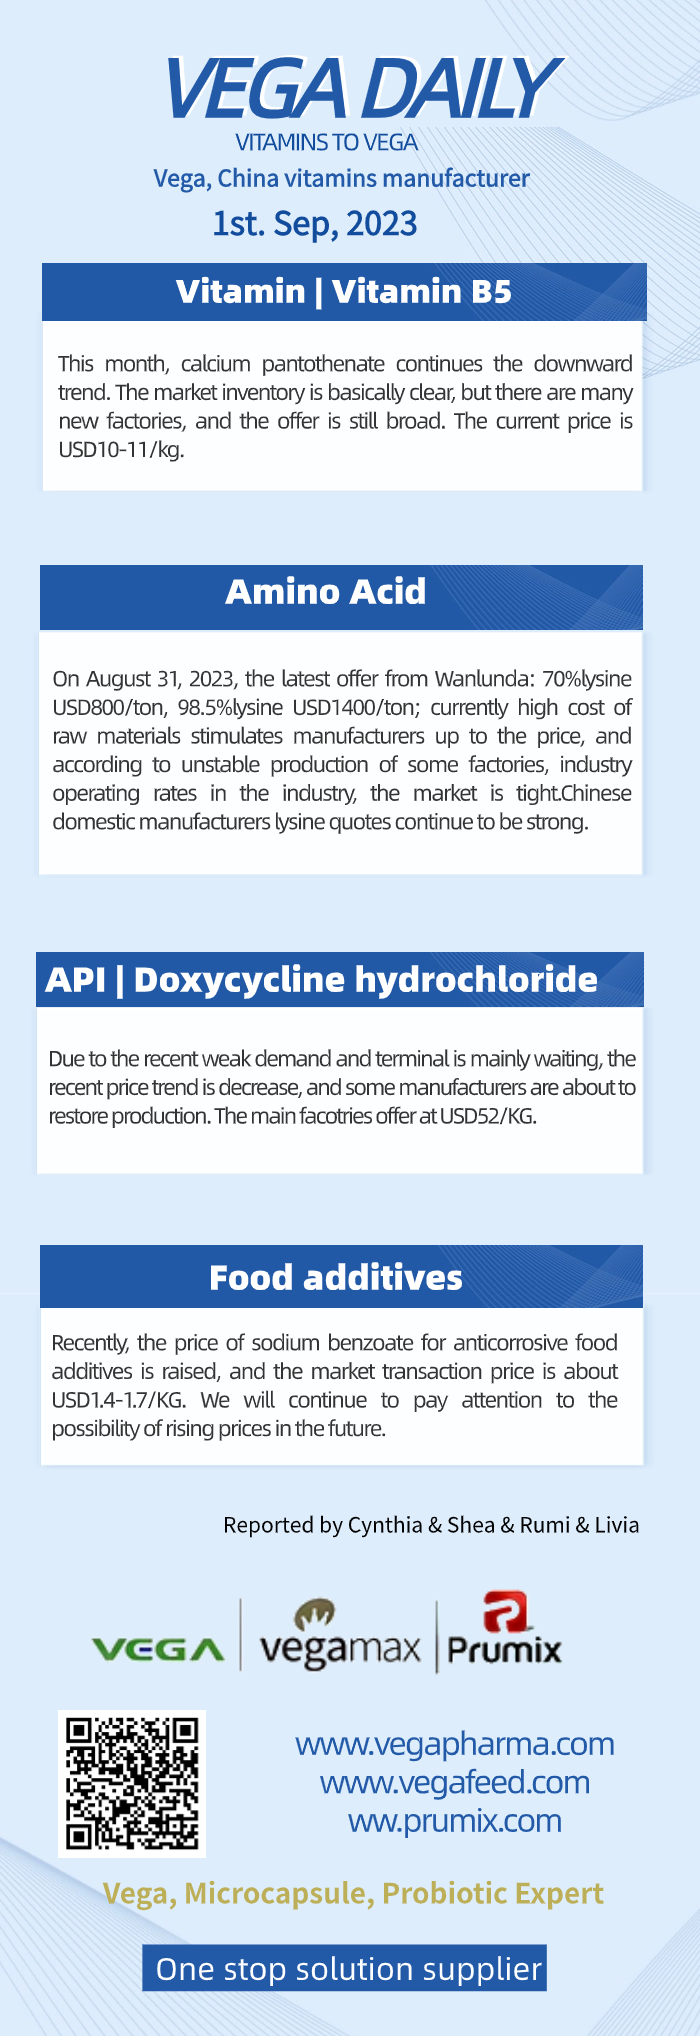 Vega Daily Dated on Sep 1st 2023 Vitamin B5 Amino Acid API Food Additives.jpg